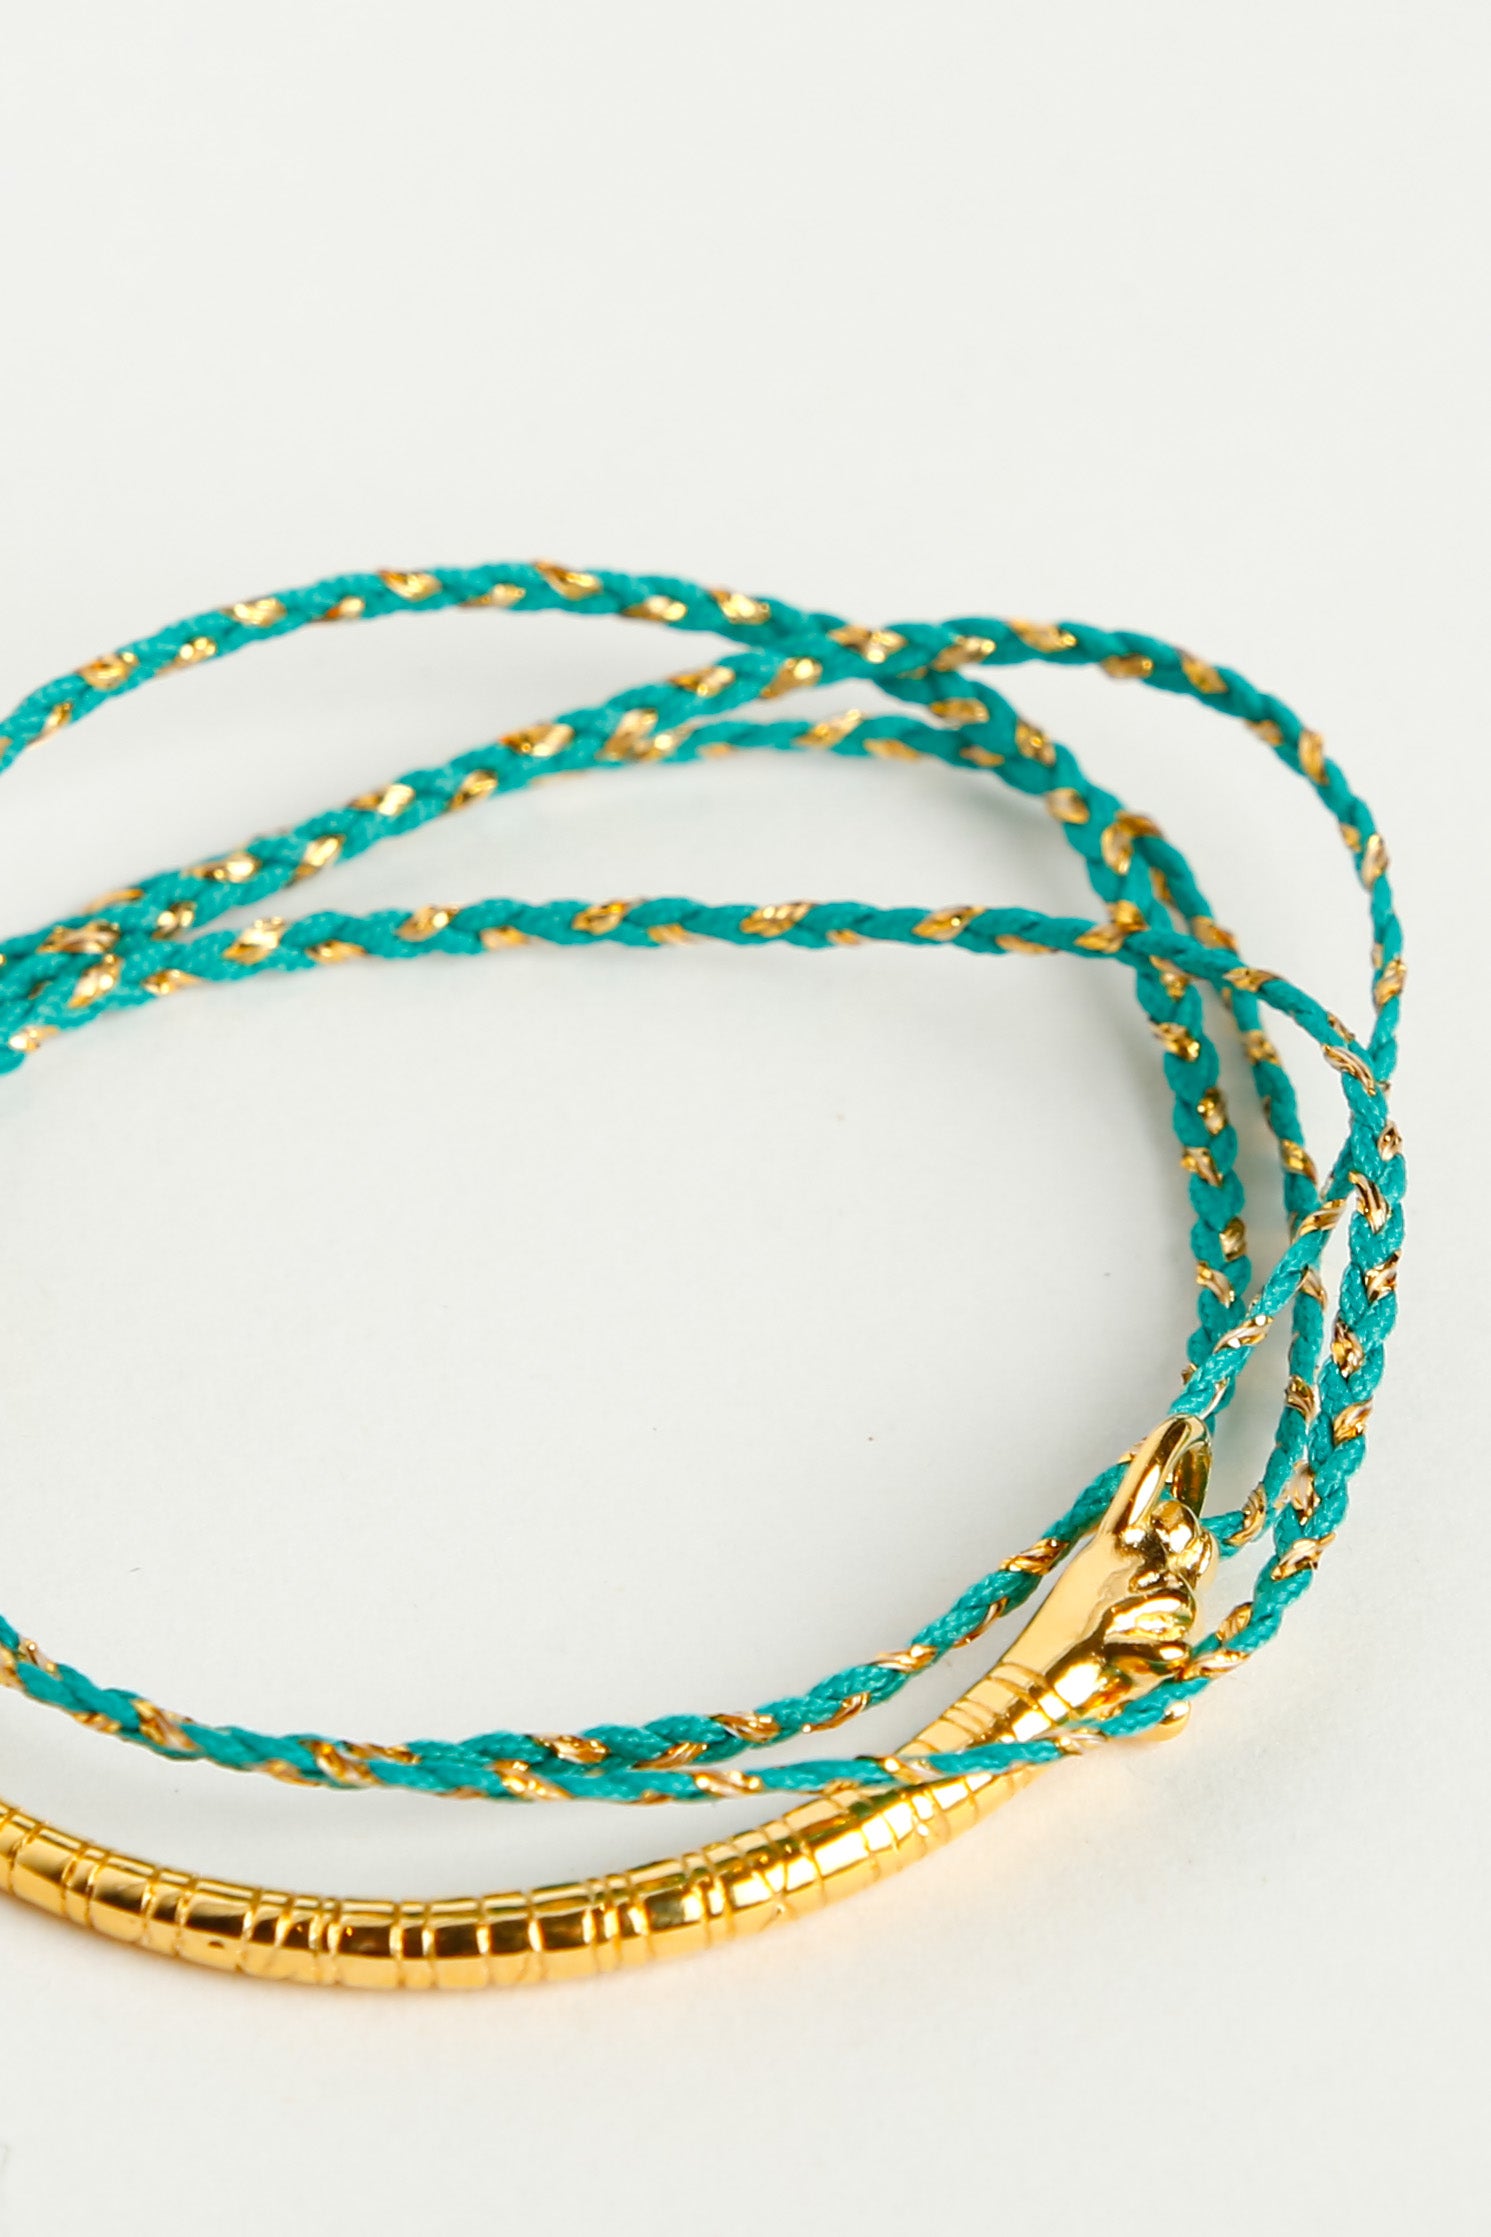 LH tina bracelet in Emerald